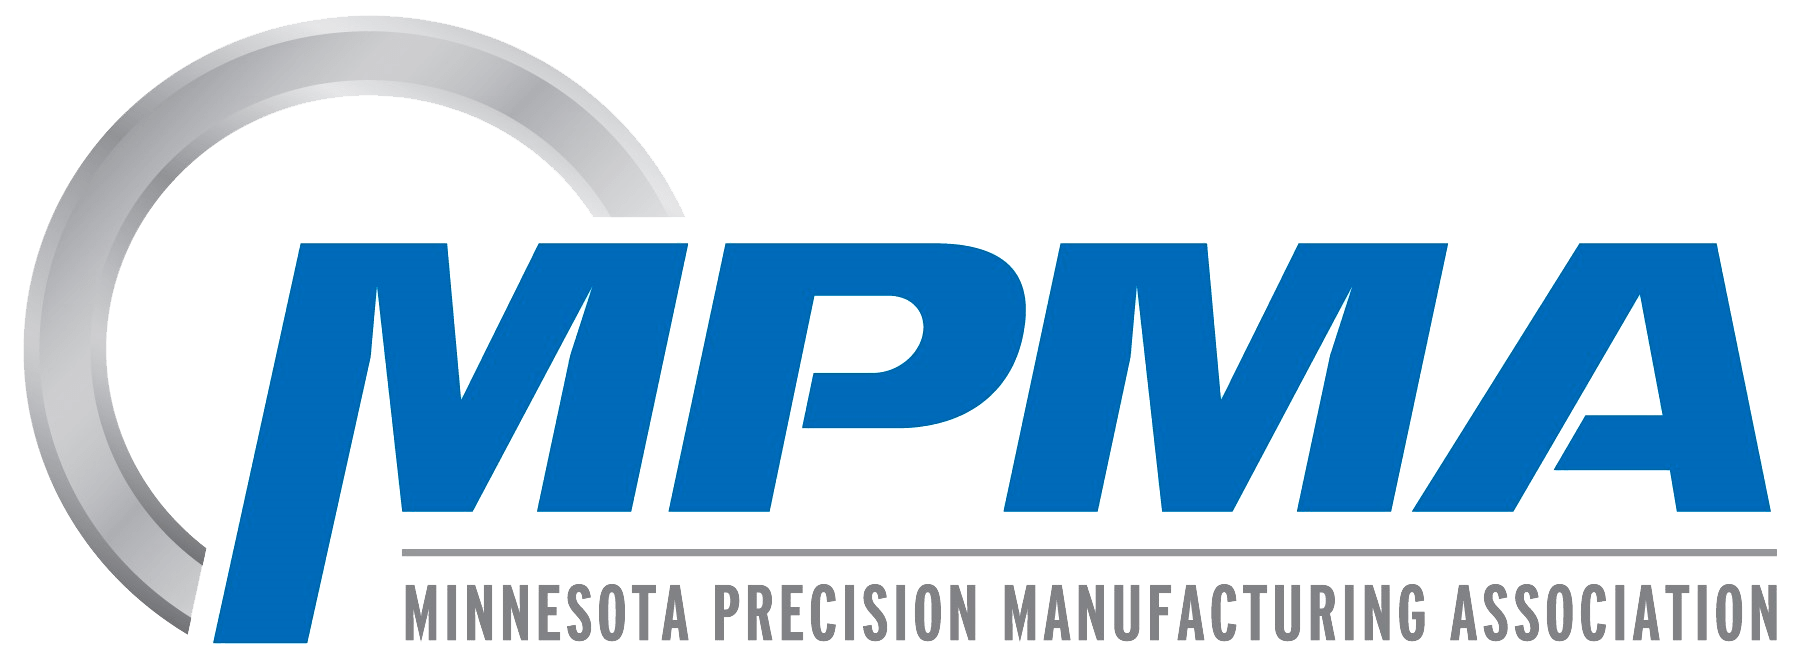 MPMA - Minnesota Precision Manufacturing Association